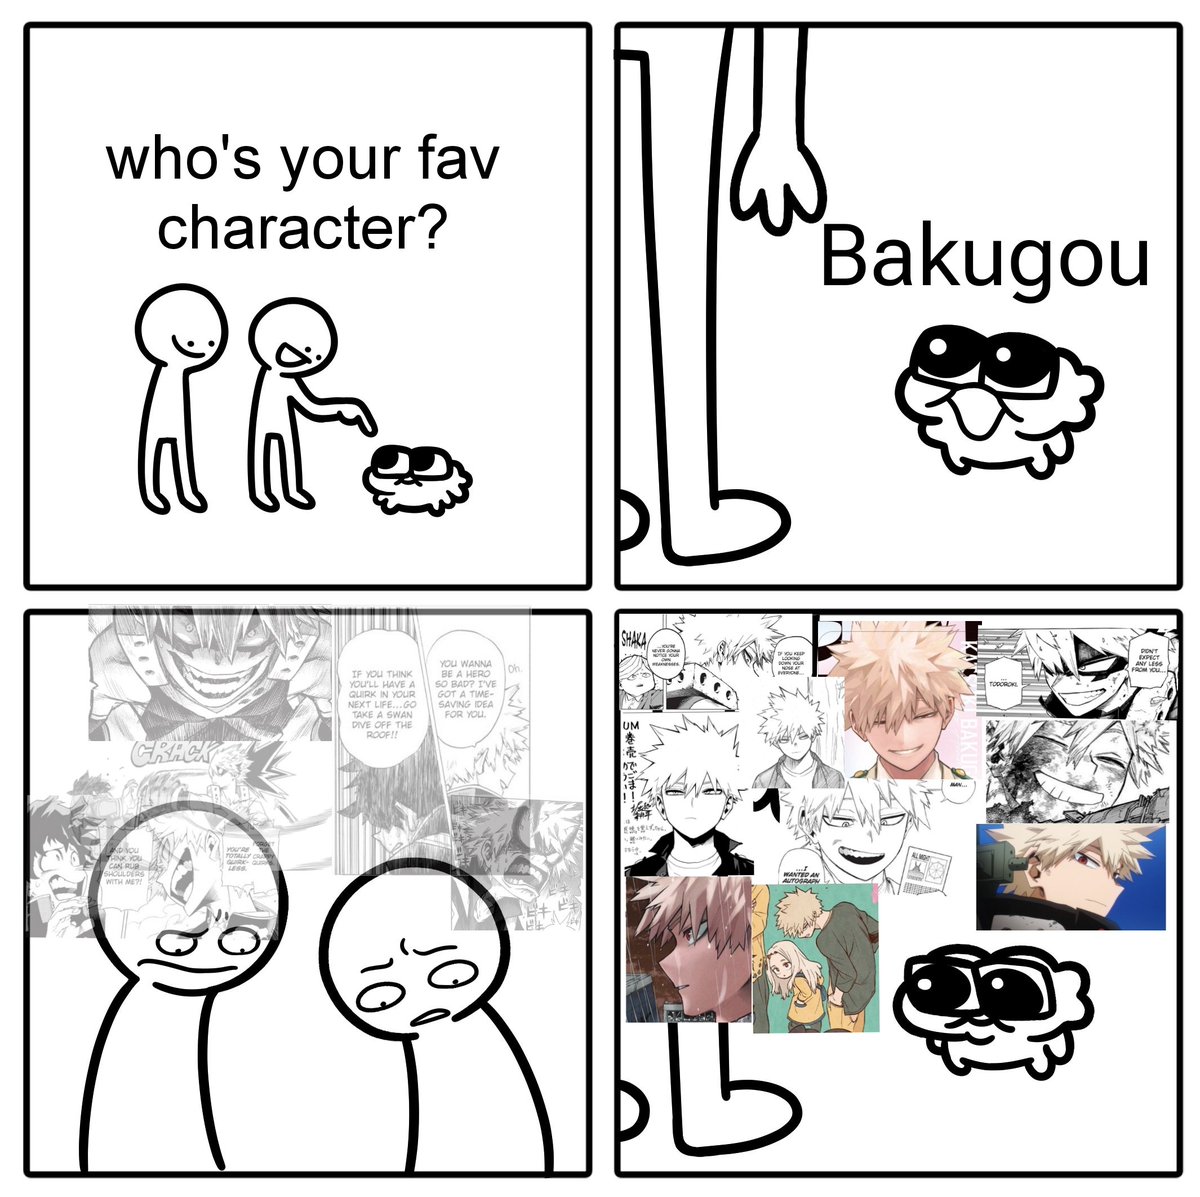 The Bakugou effect